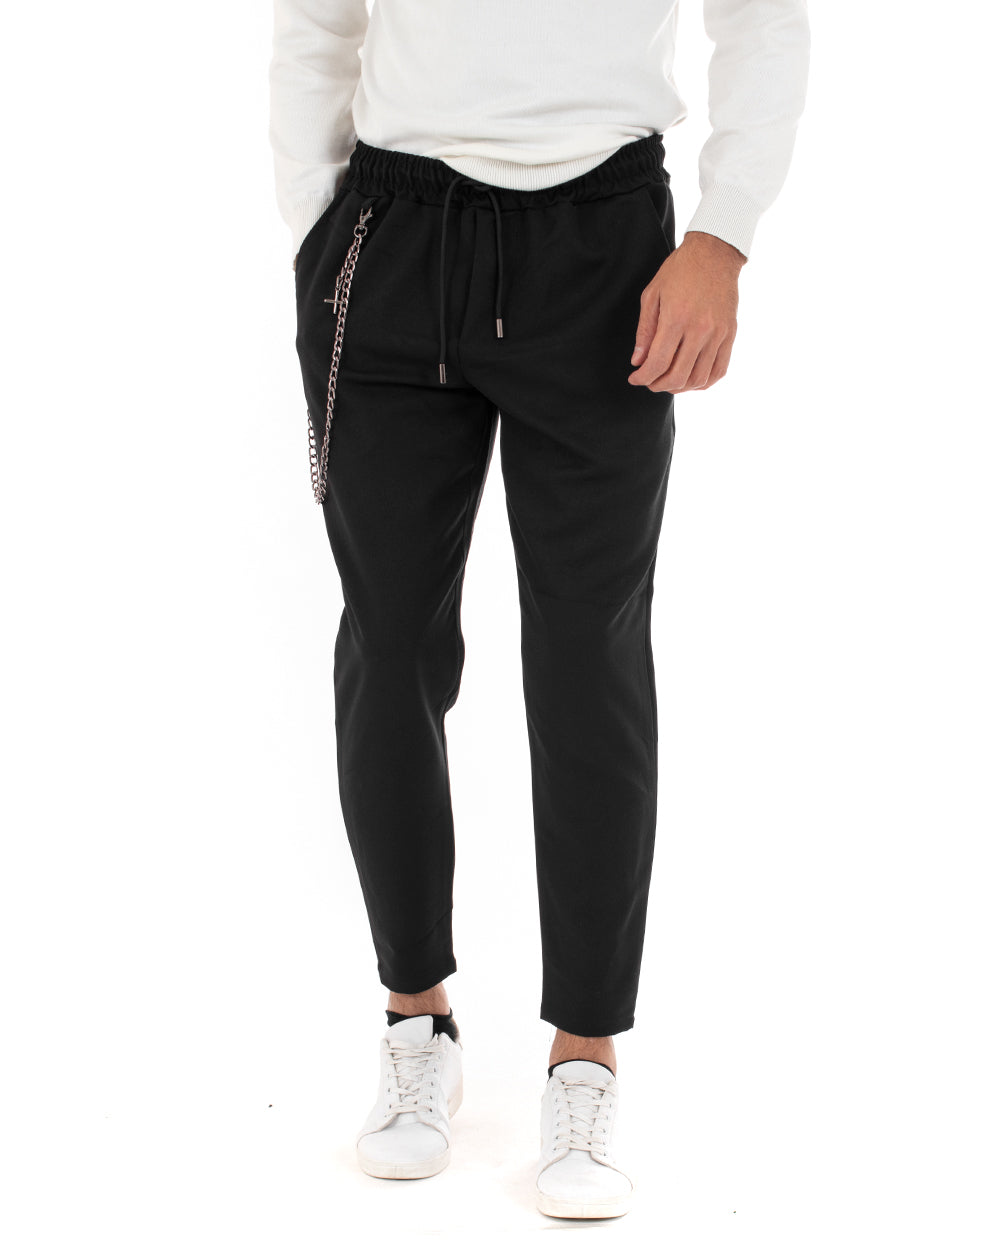 Men's Long Elastic Drawstring Pants Solid Color Chain Black GIOSAL